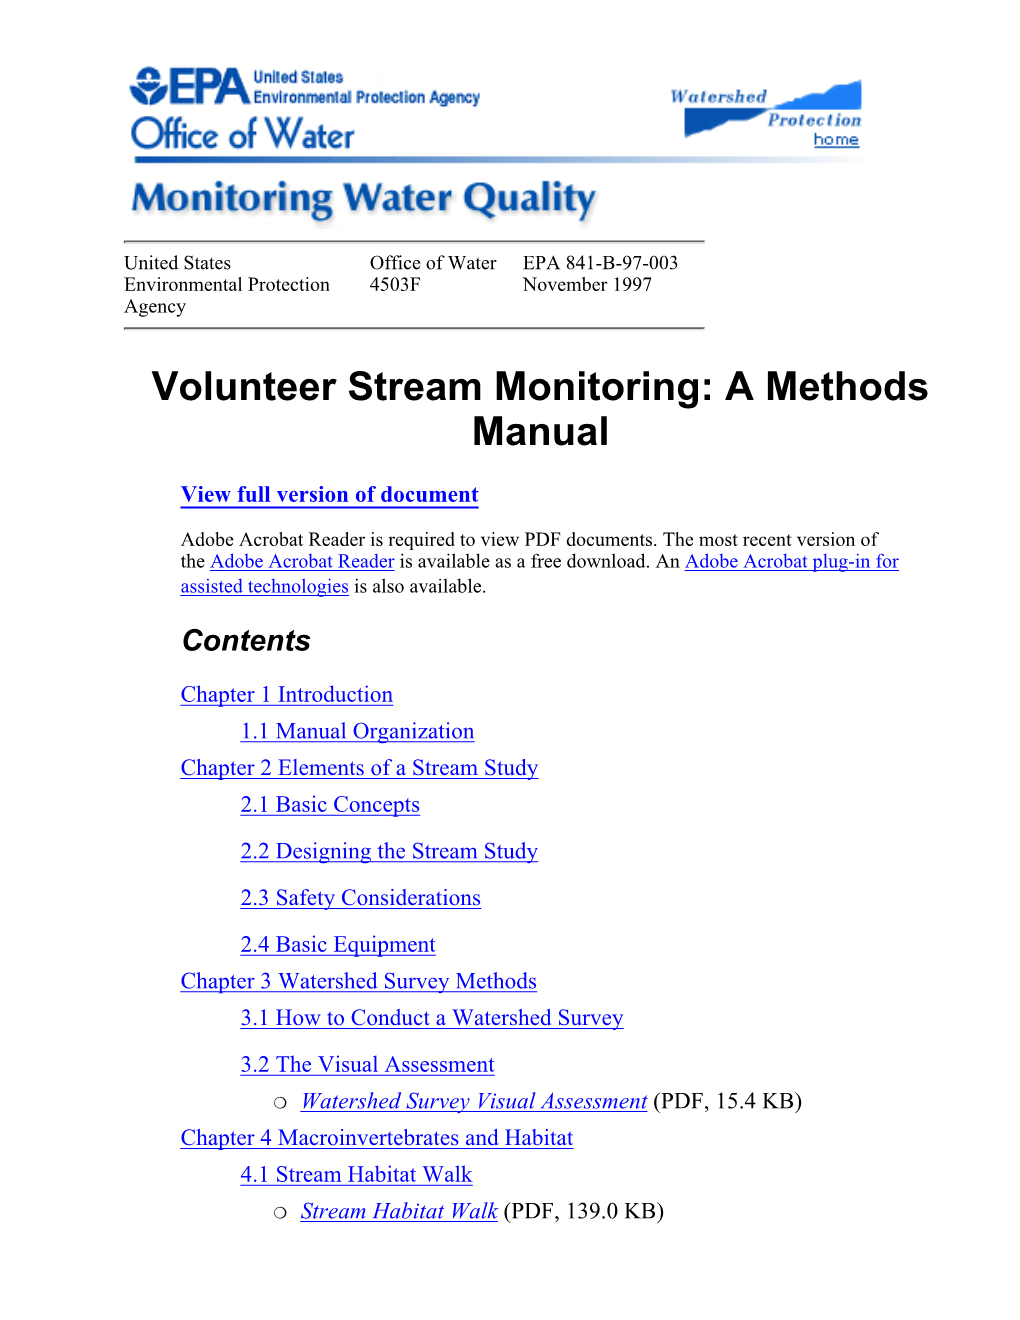 Volunteer Stream Monitoring: a Methods Manual